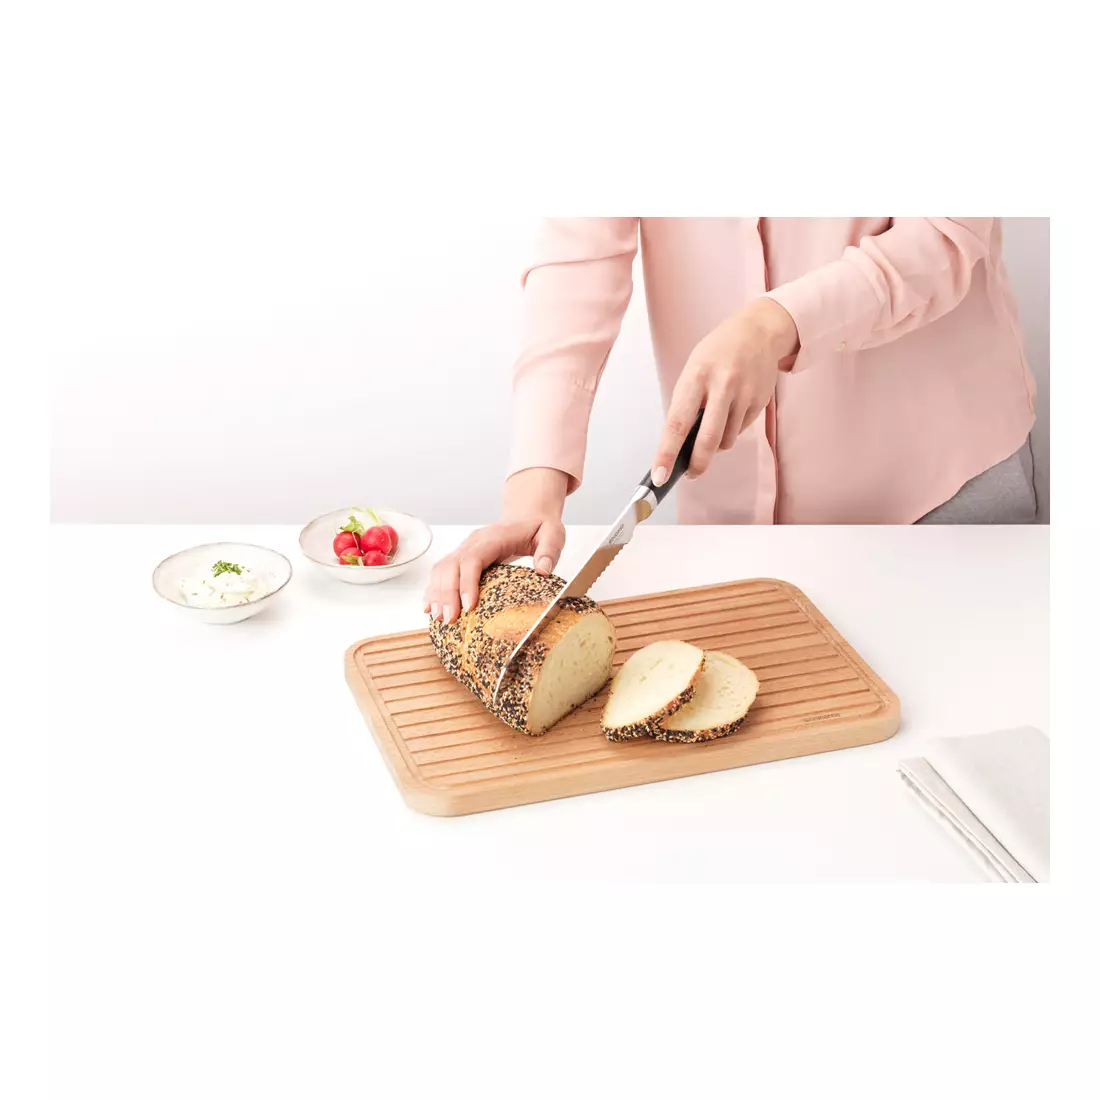 BRABANTIA Profile bread cutting board, wooden